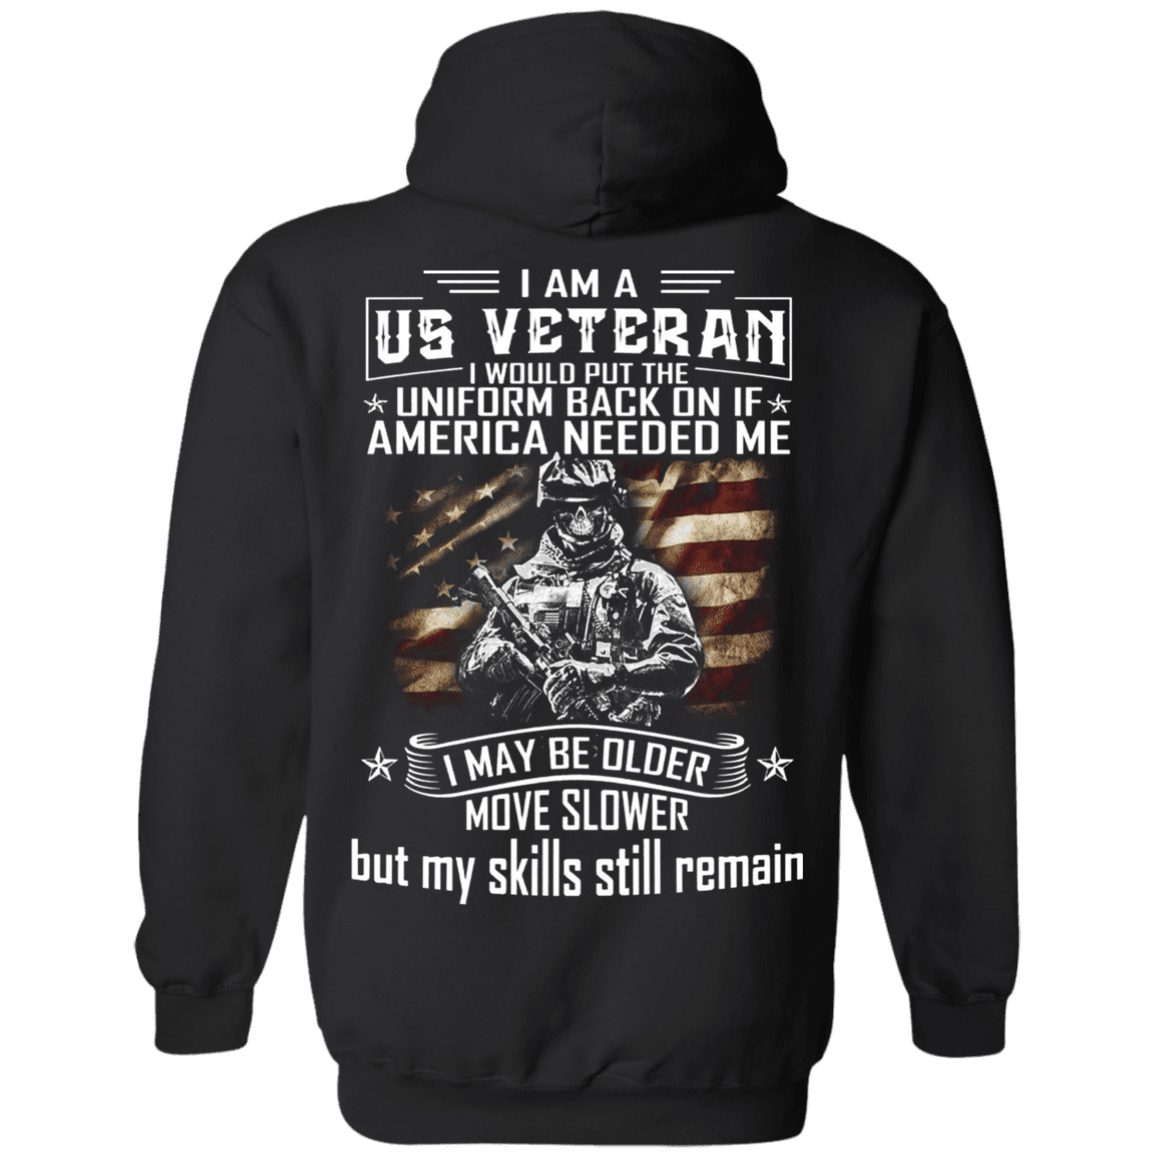 Military T-Shirt "I am A US Veteran With Skill Sitll Remain" Men Back-TShirt-General-Veterans Nation